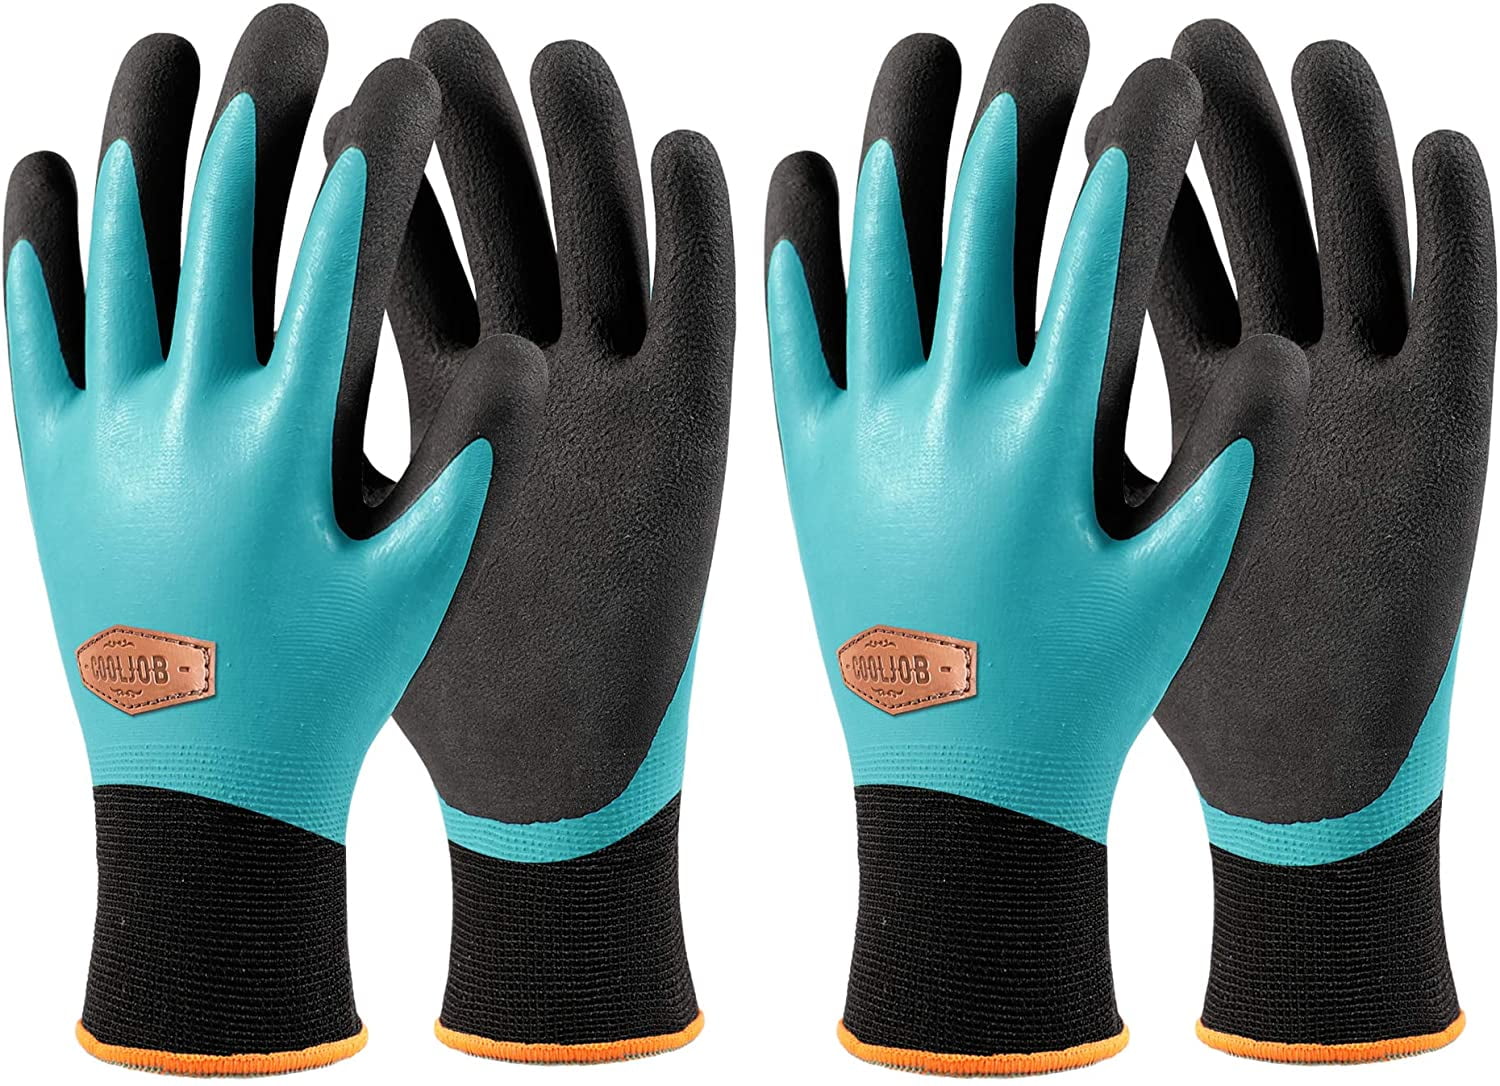 10 x Pair Of Showa 306 Fully Coated Waterproof Latex Grip Breathable Work Gloves 